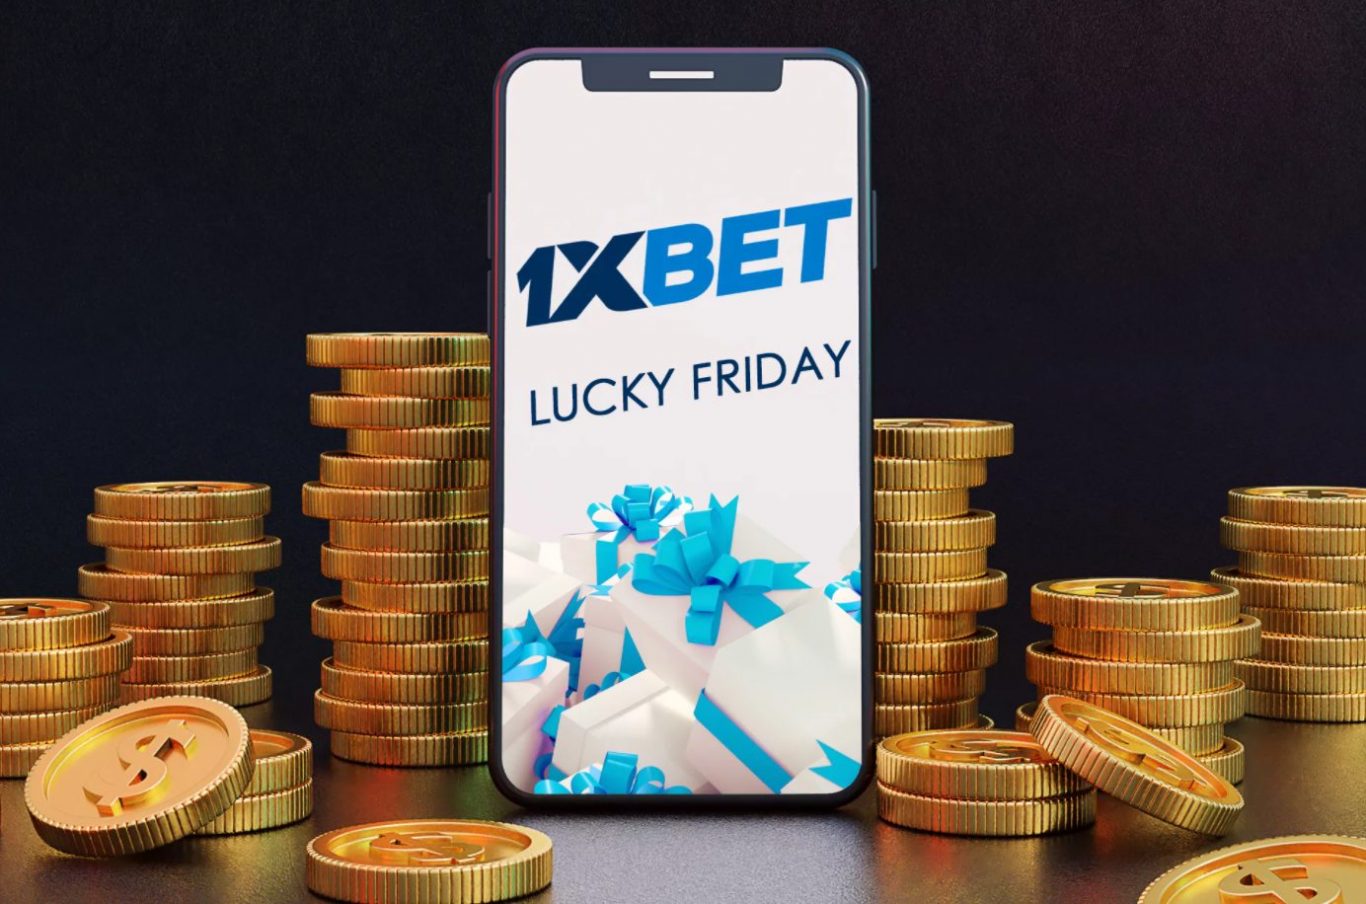 1xBet bonus on the betting platform